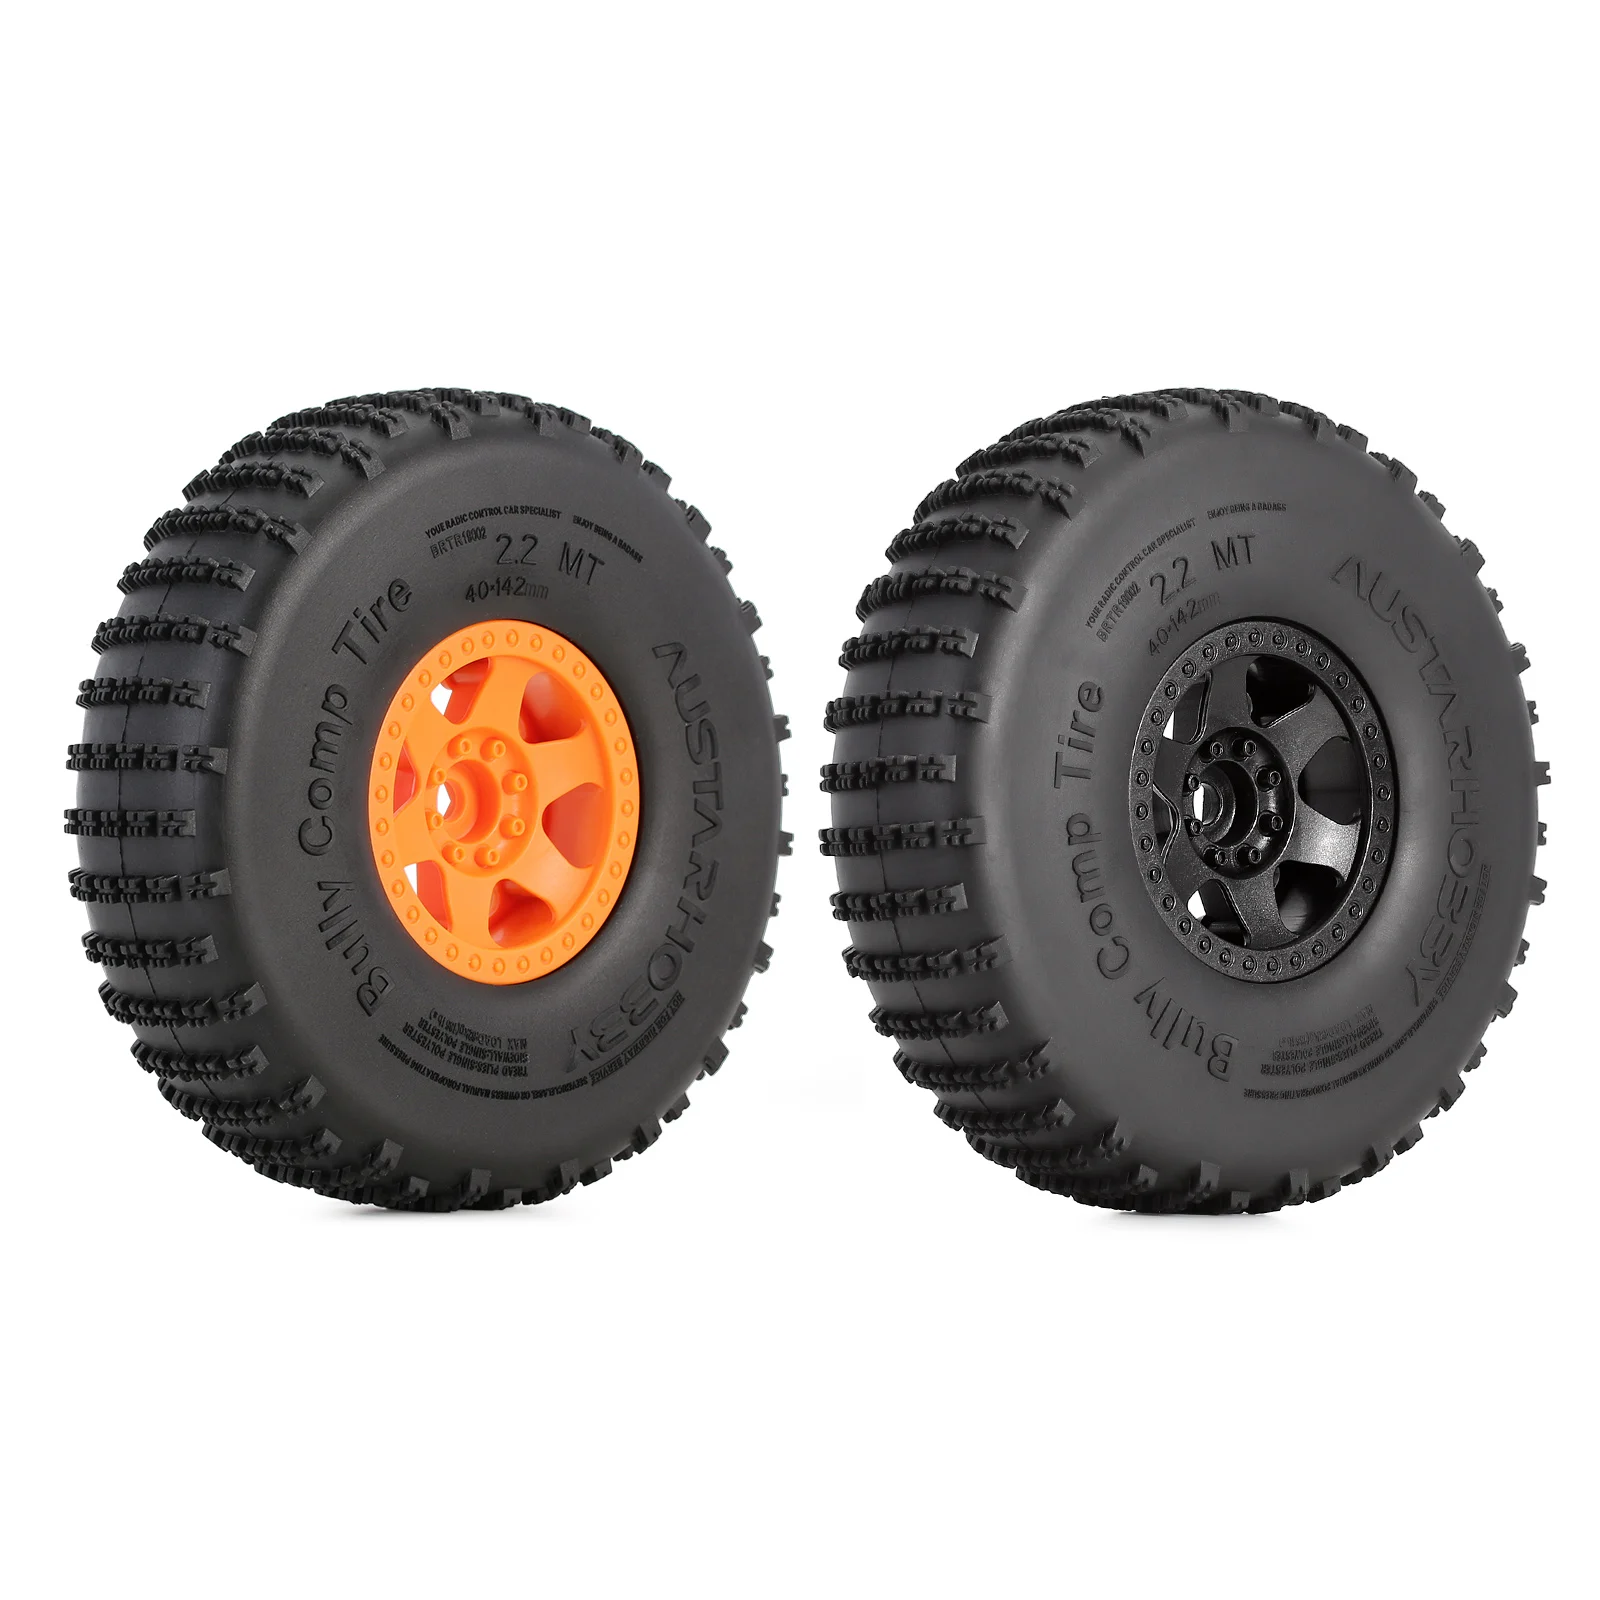 Plastic 2.2" Beadlock Buggy Bully Wheel Rim&Comp Tires for RC Crawler Axial SCX10 Wraith 90018 RR10 Bomber RBX10 Ryft